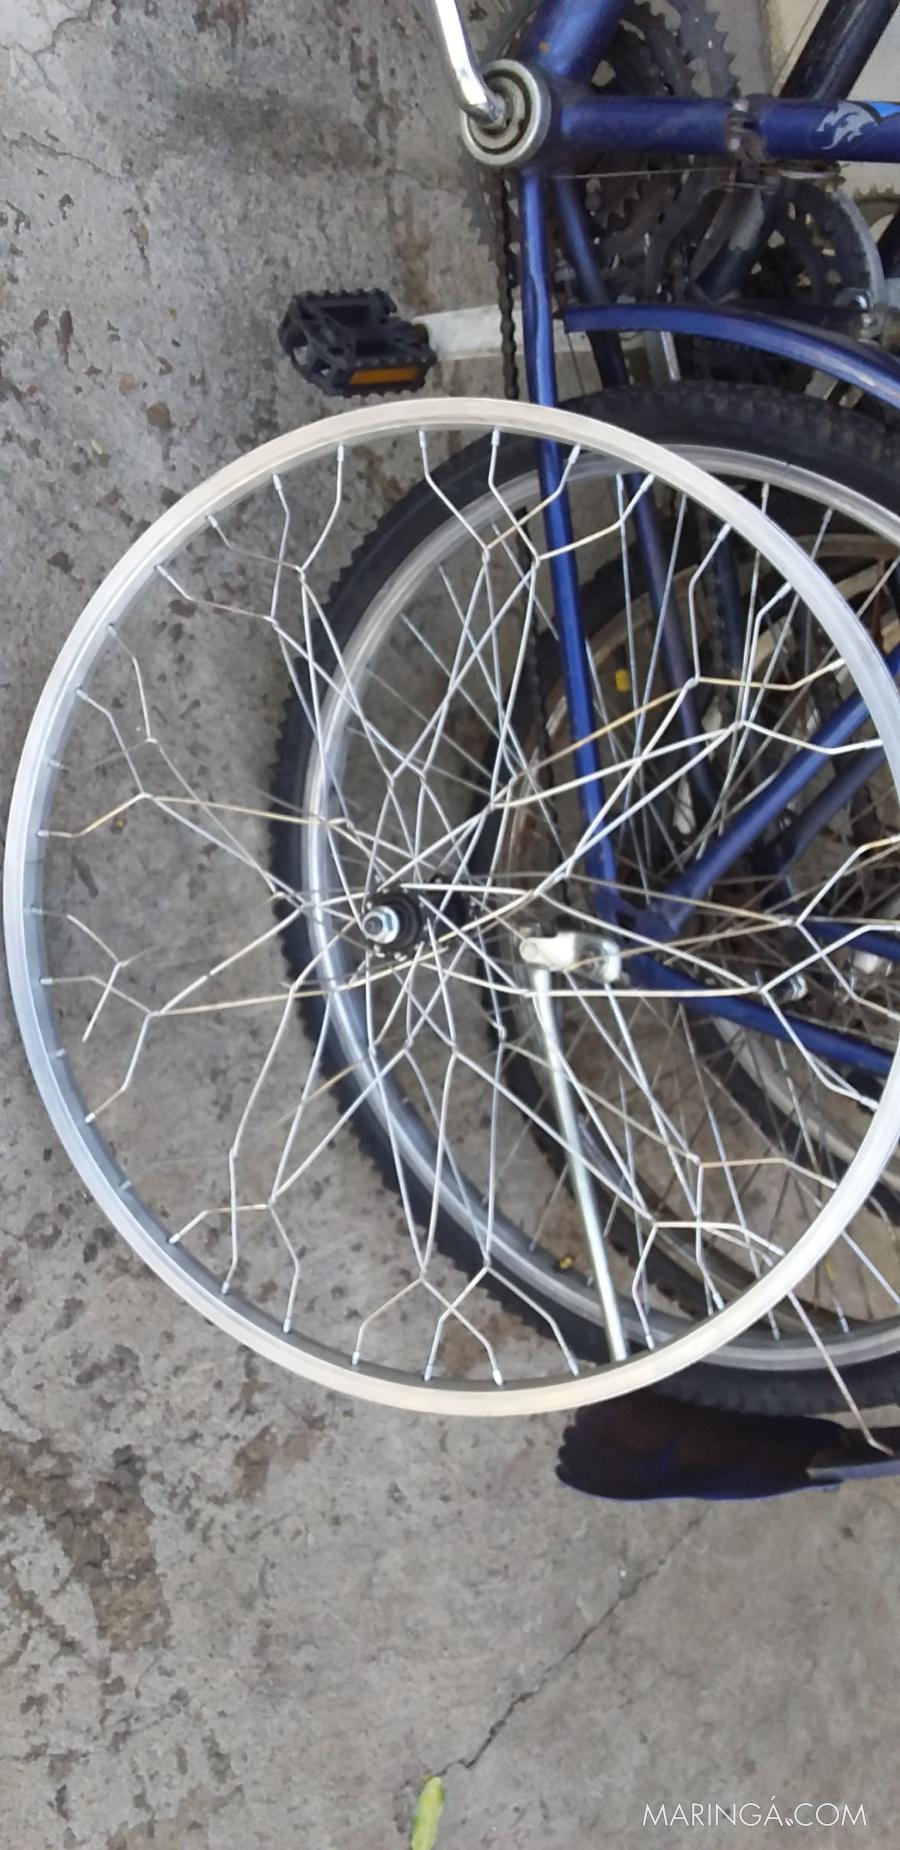 Raiamento de roda de bicicleta trancado faço sob encomenda